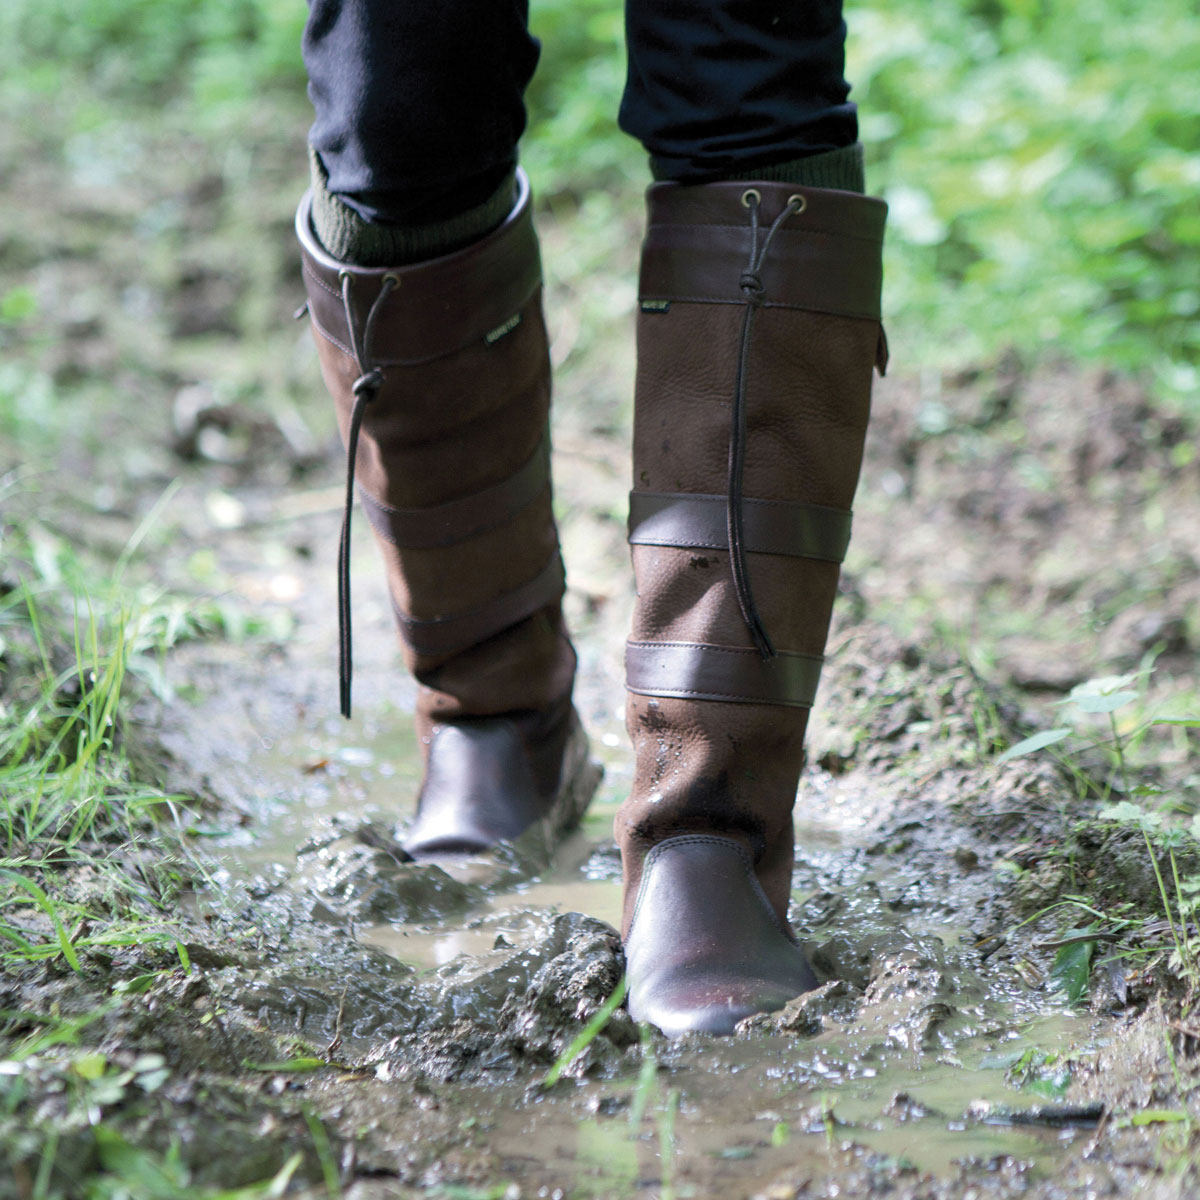 dubarry boots womens sale